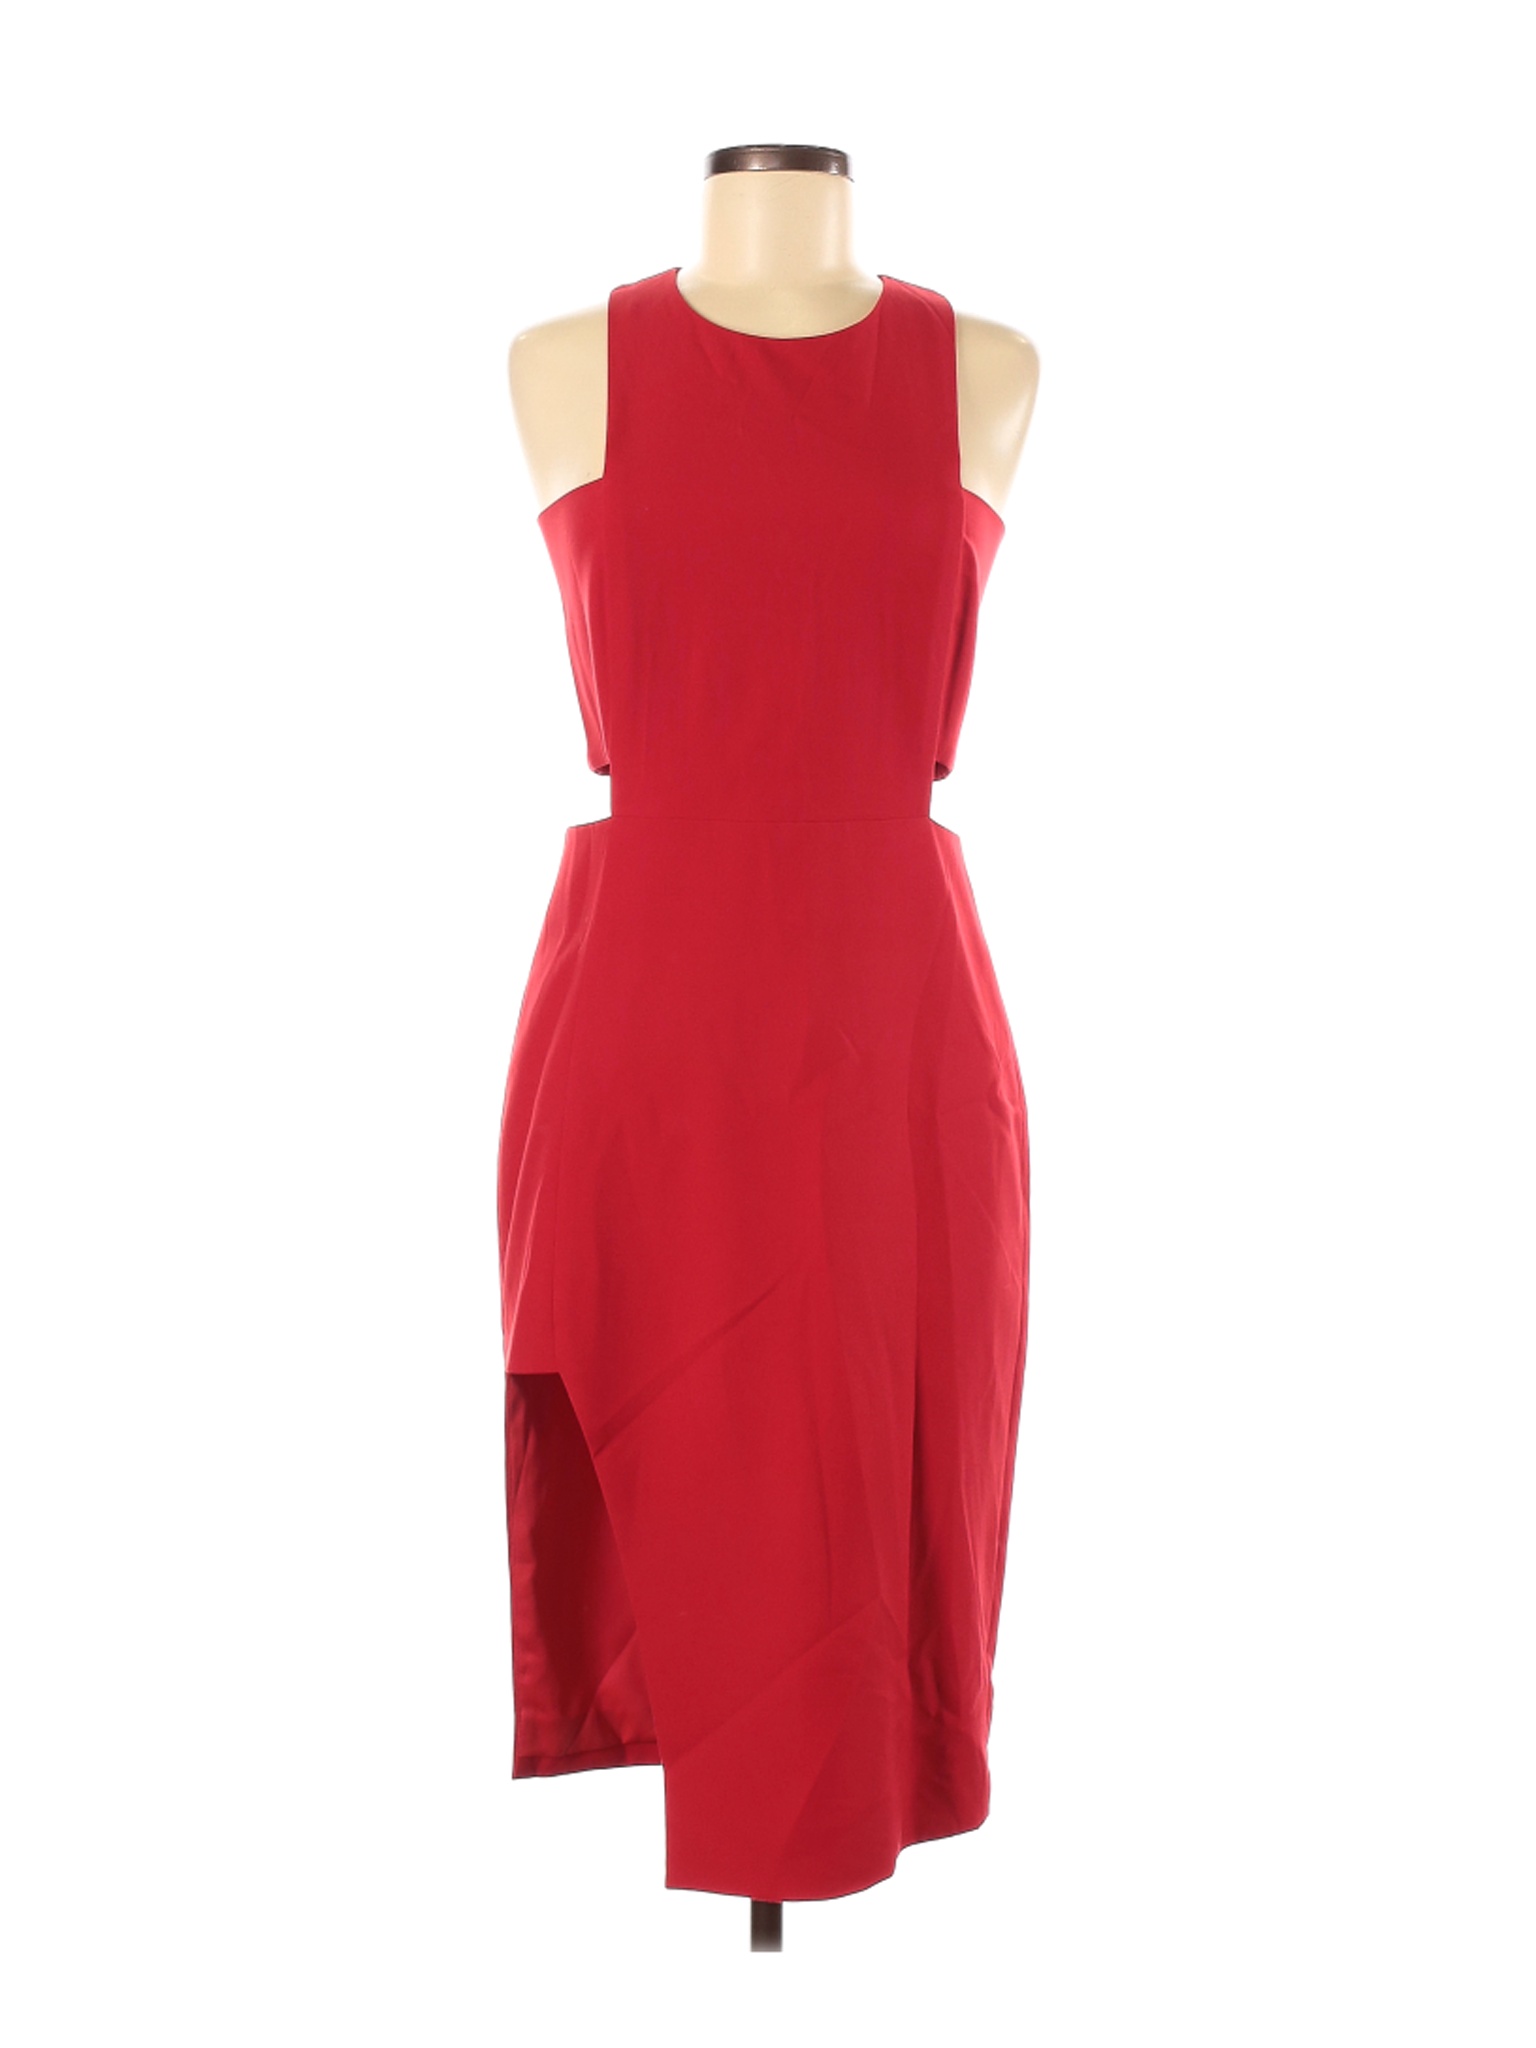 Mason Women Red Cocktail Dress 6 | eBay